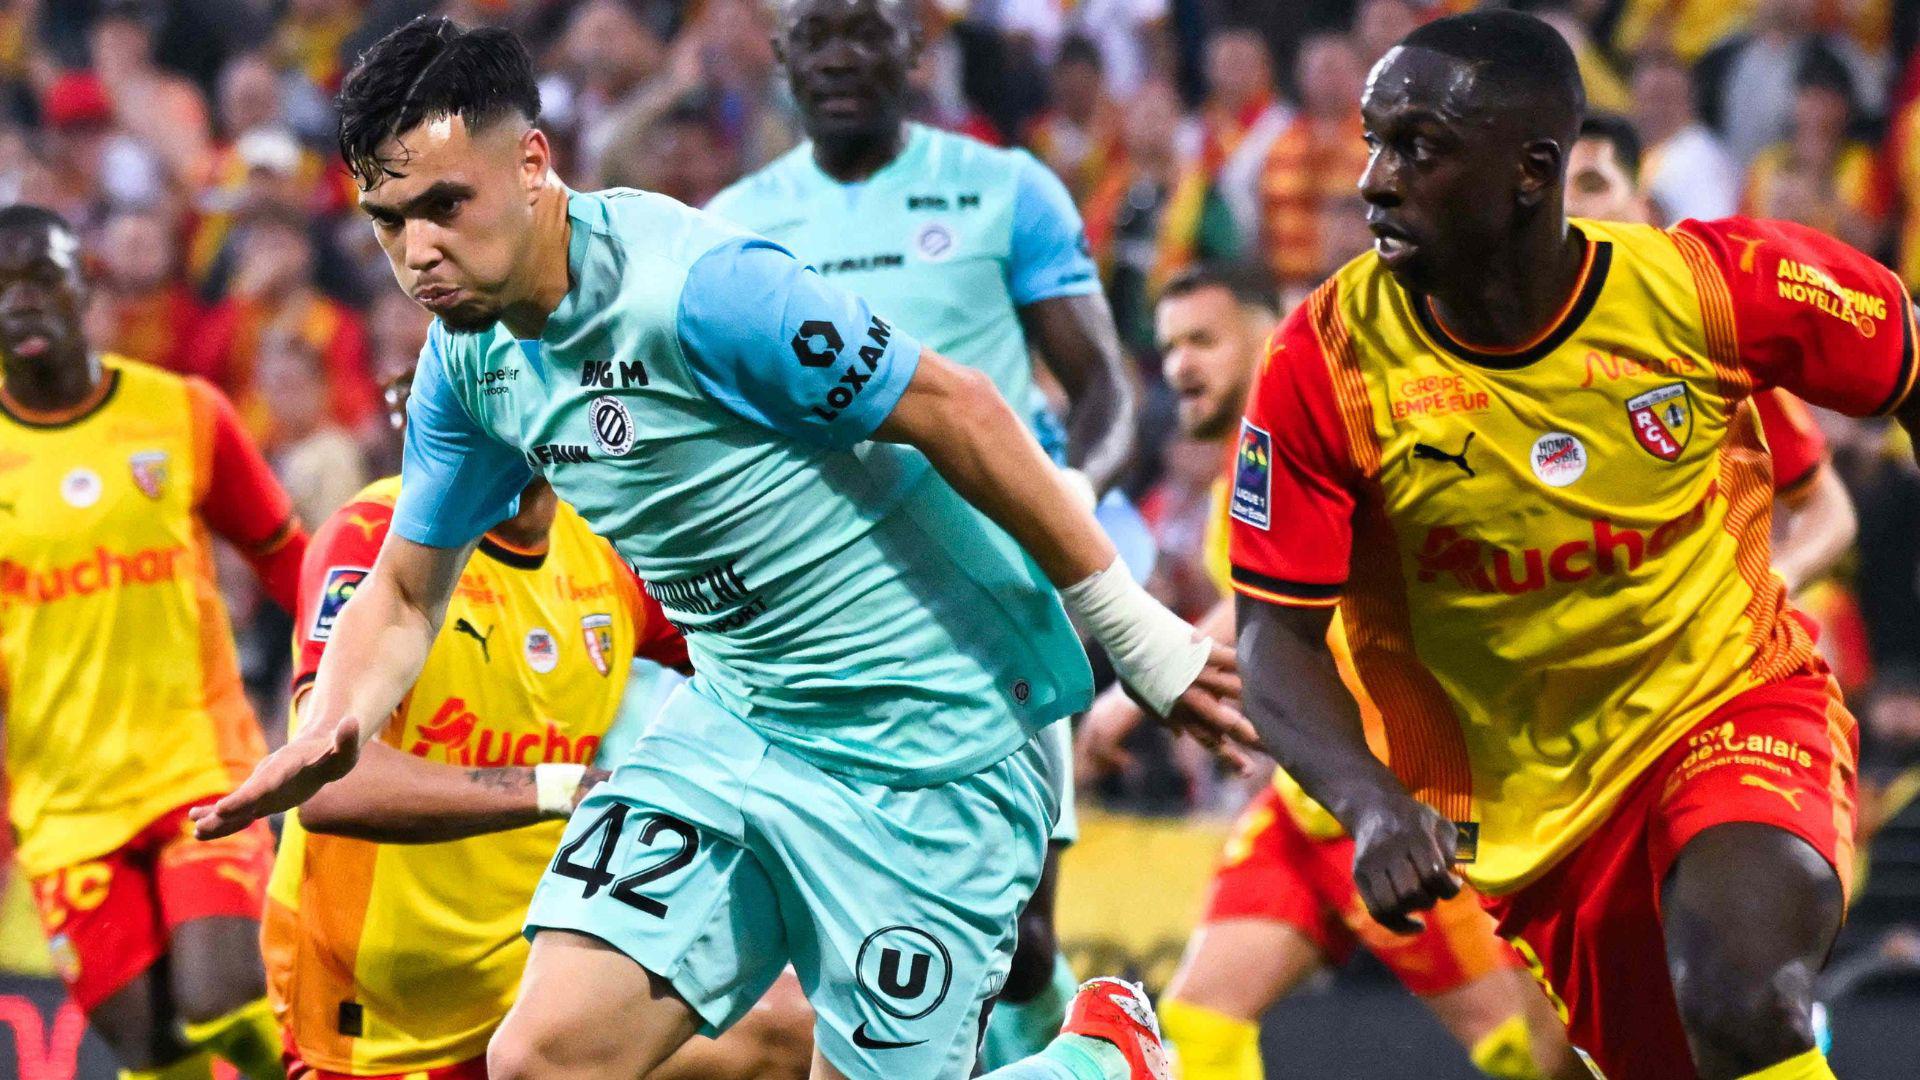 VIDEO | Ligue 1 Highlights: Lens vs Montpellier